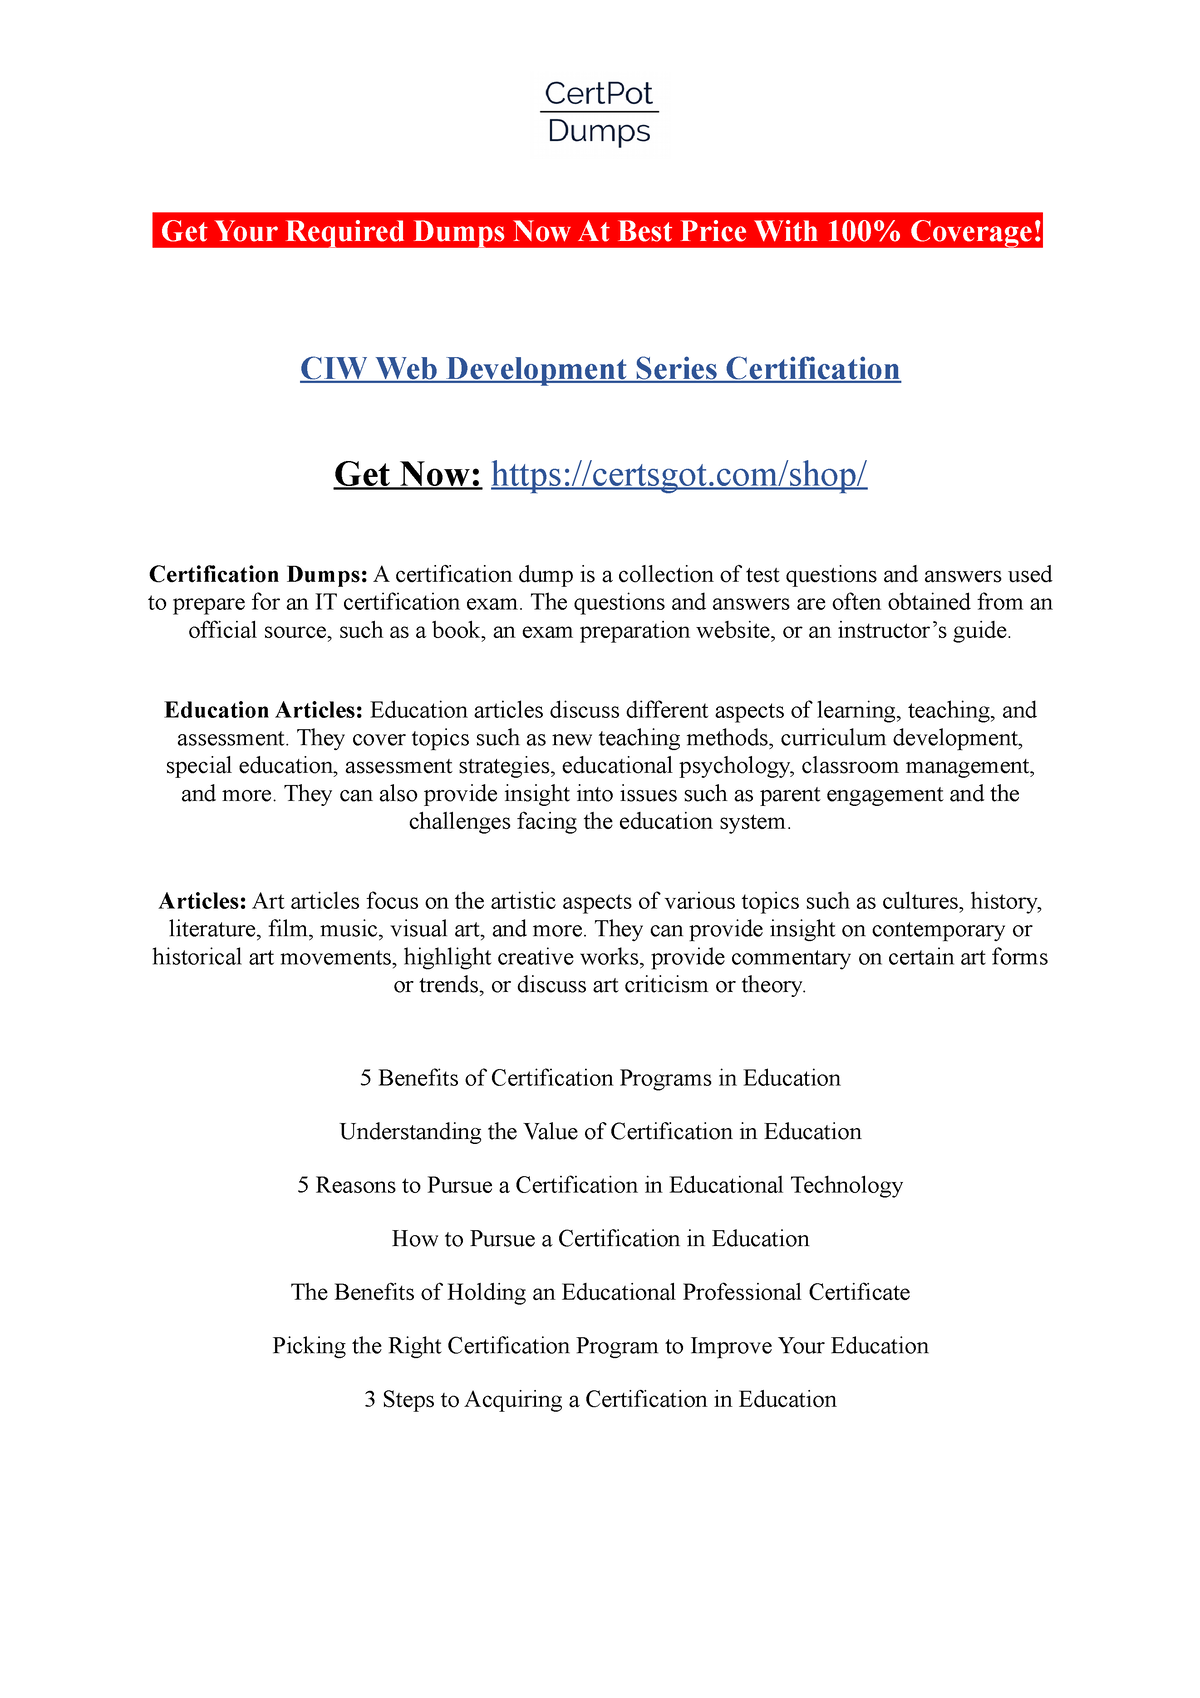 CIW Web Development Series Certification Get Your Required Dumps Now